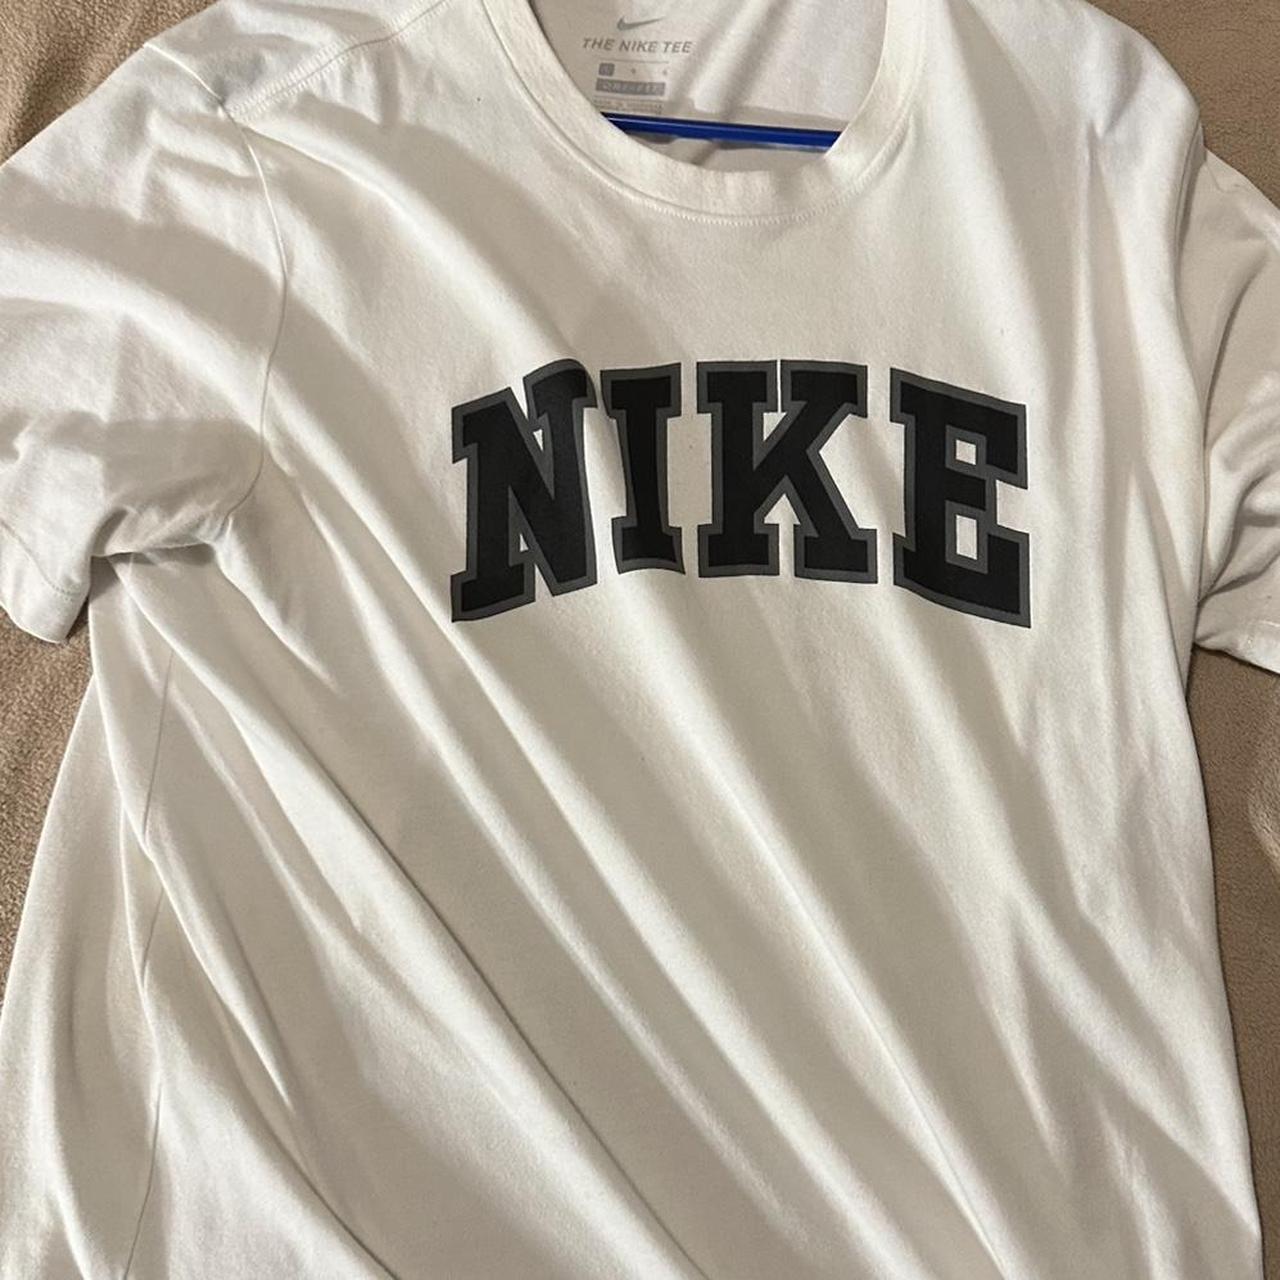 Nike t shirt - Depop